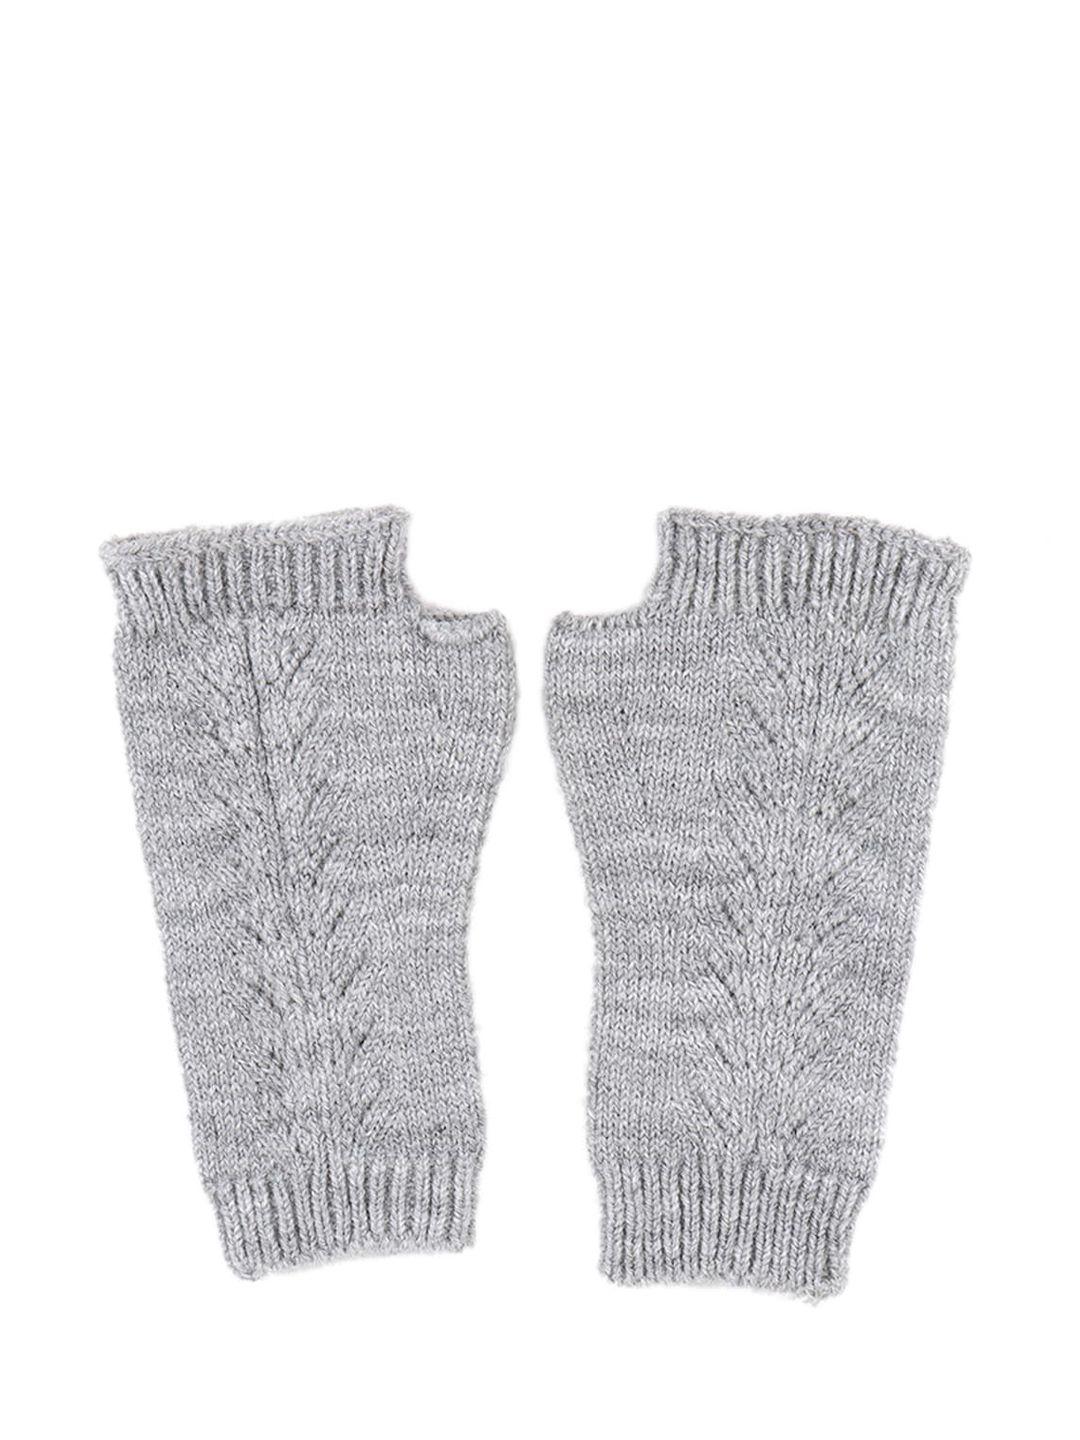 bharatasya kids grey knitted fingerless acrylic winter gloves